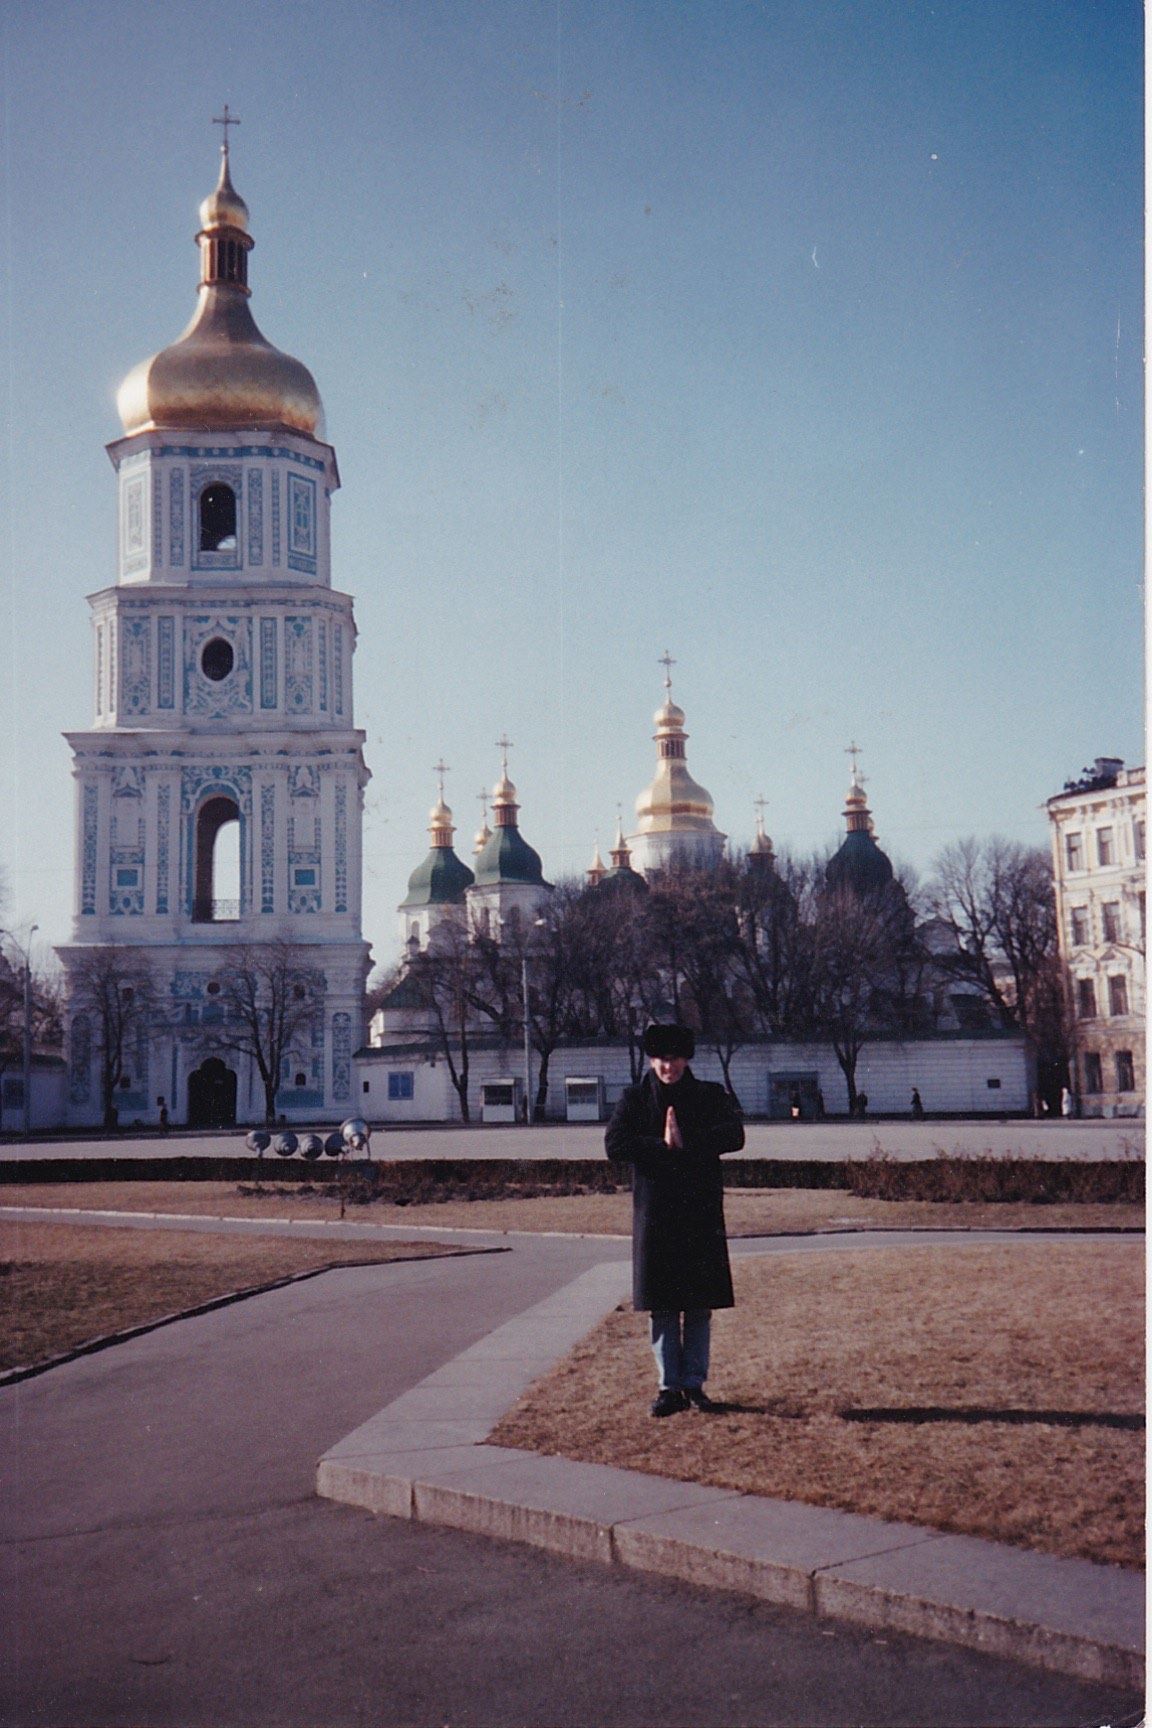 St. Sofia's Cathedral in Kiev, Ukraine